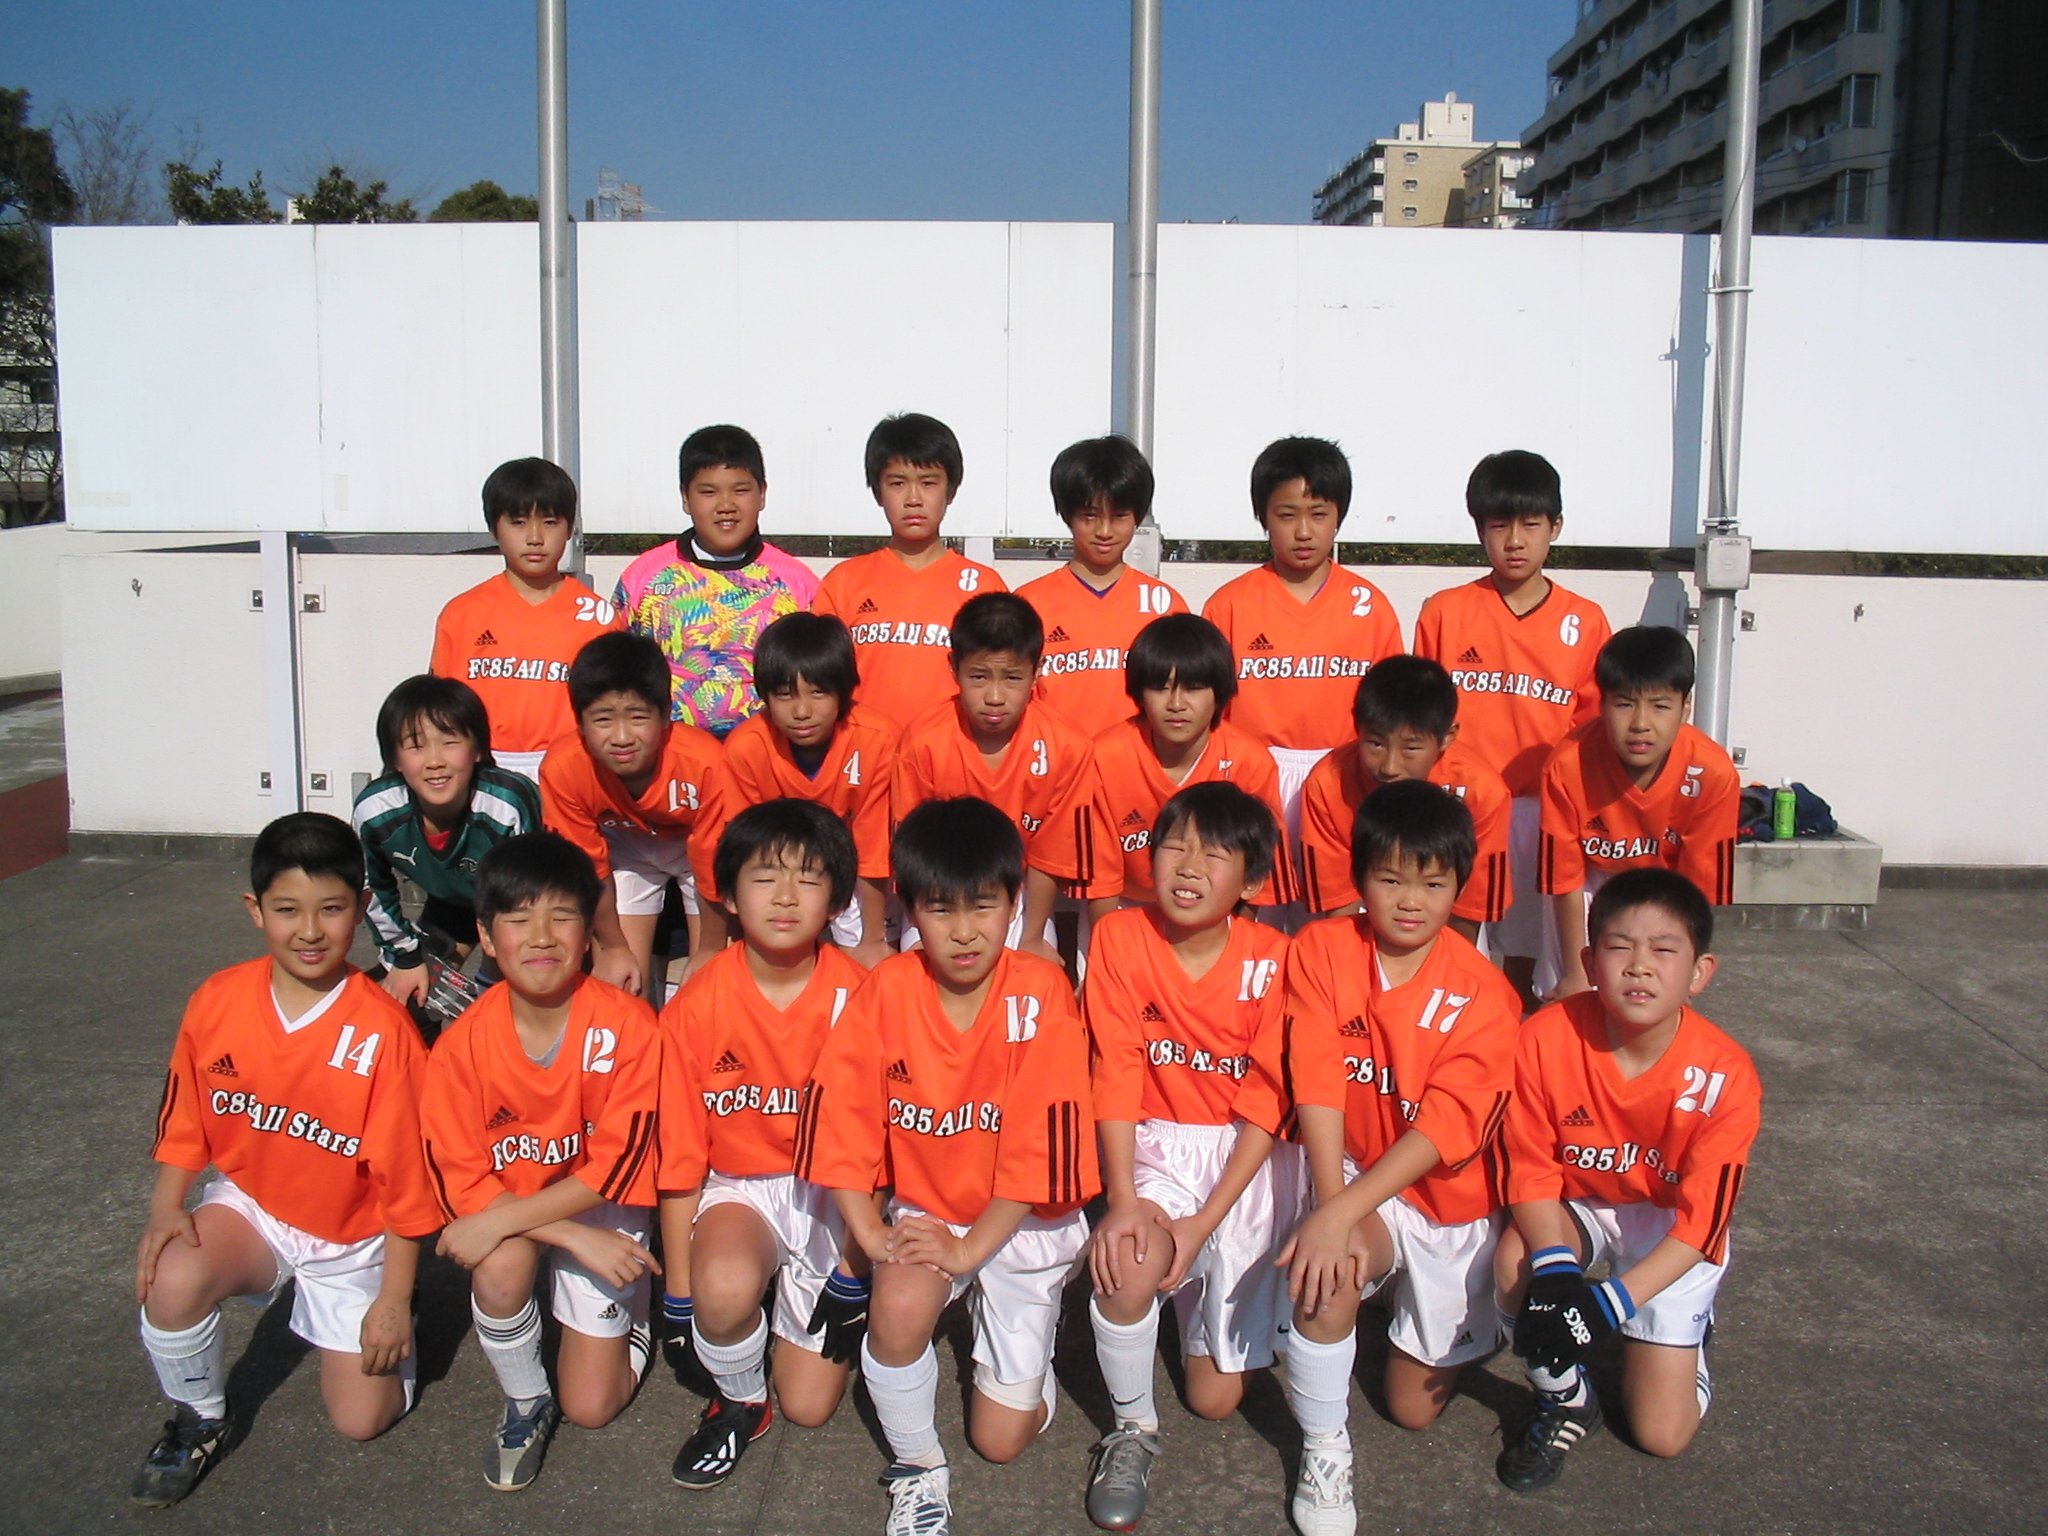 江戸川連盟新春サッカー大会2004